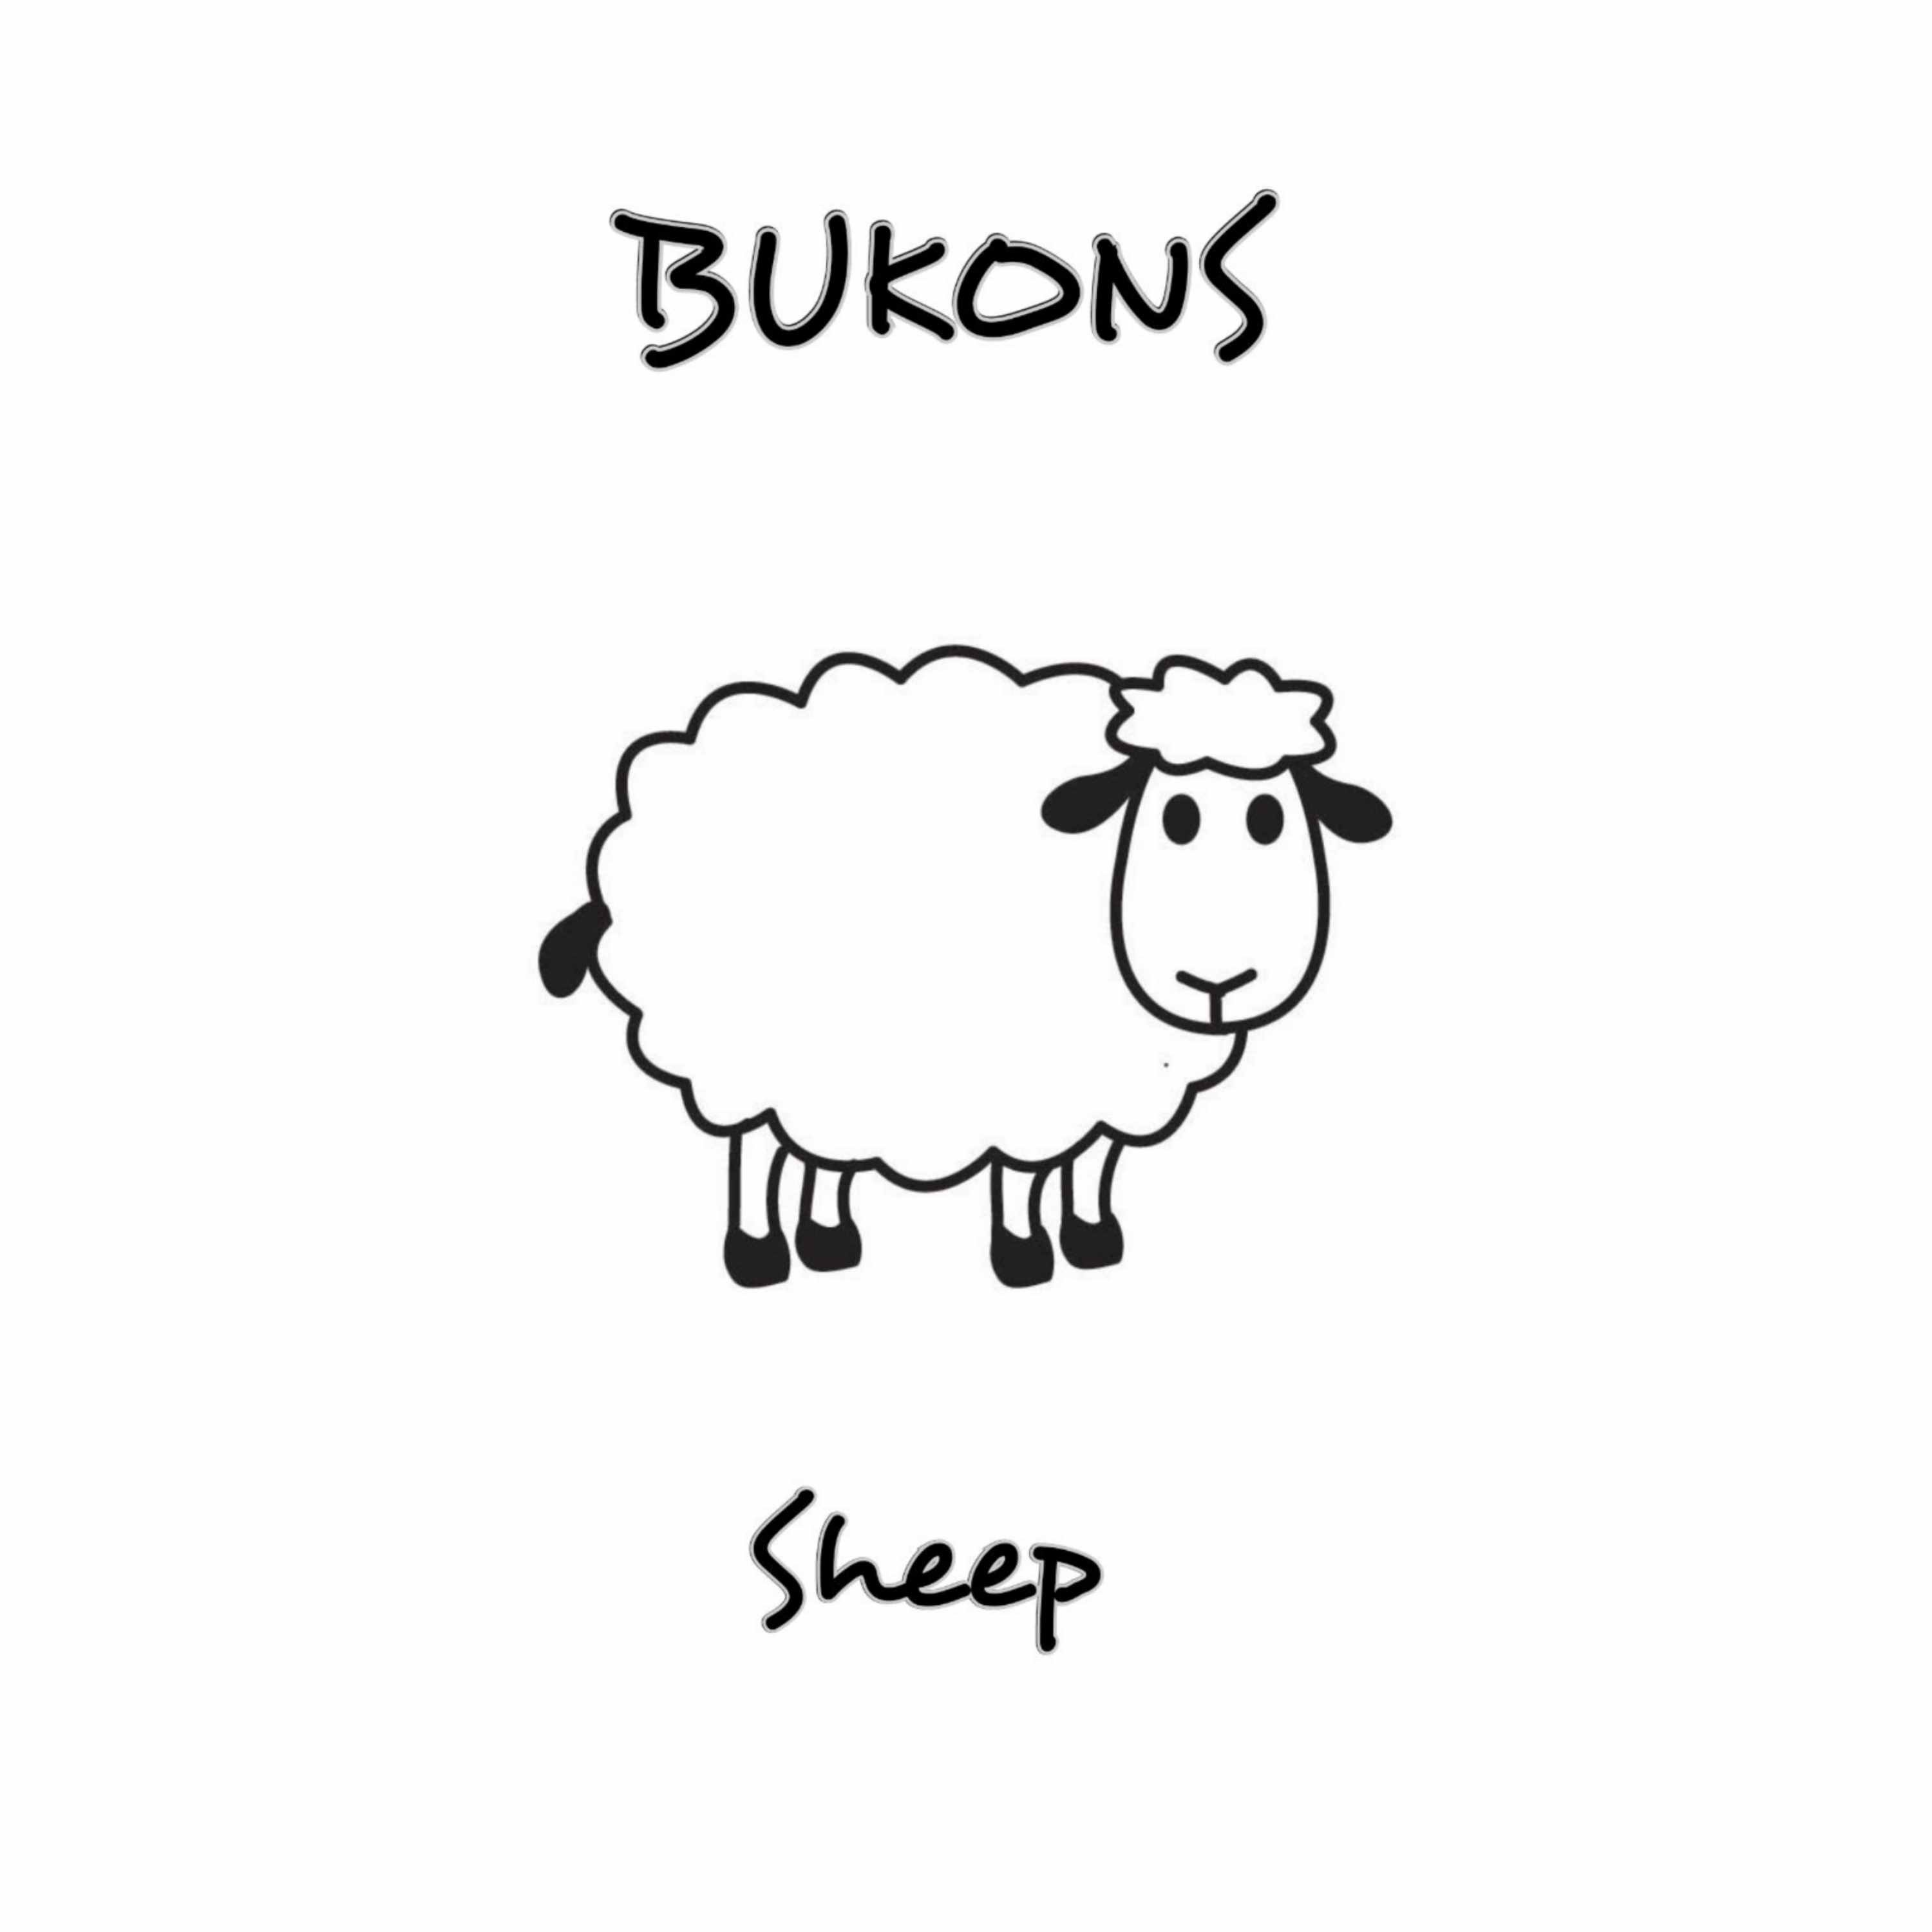 A Sheep's Song